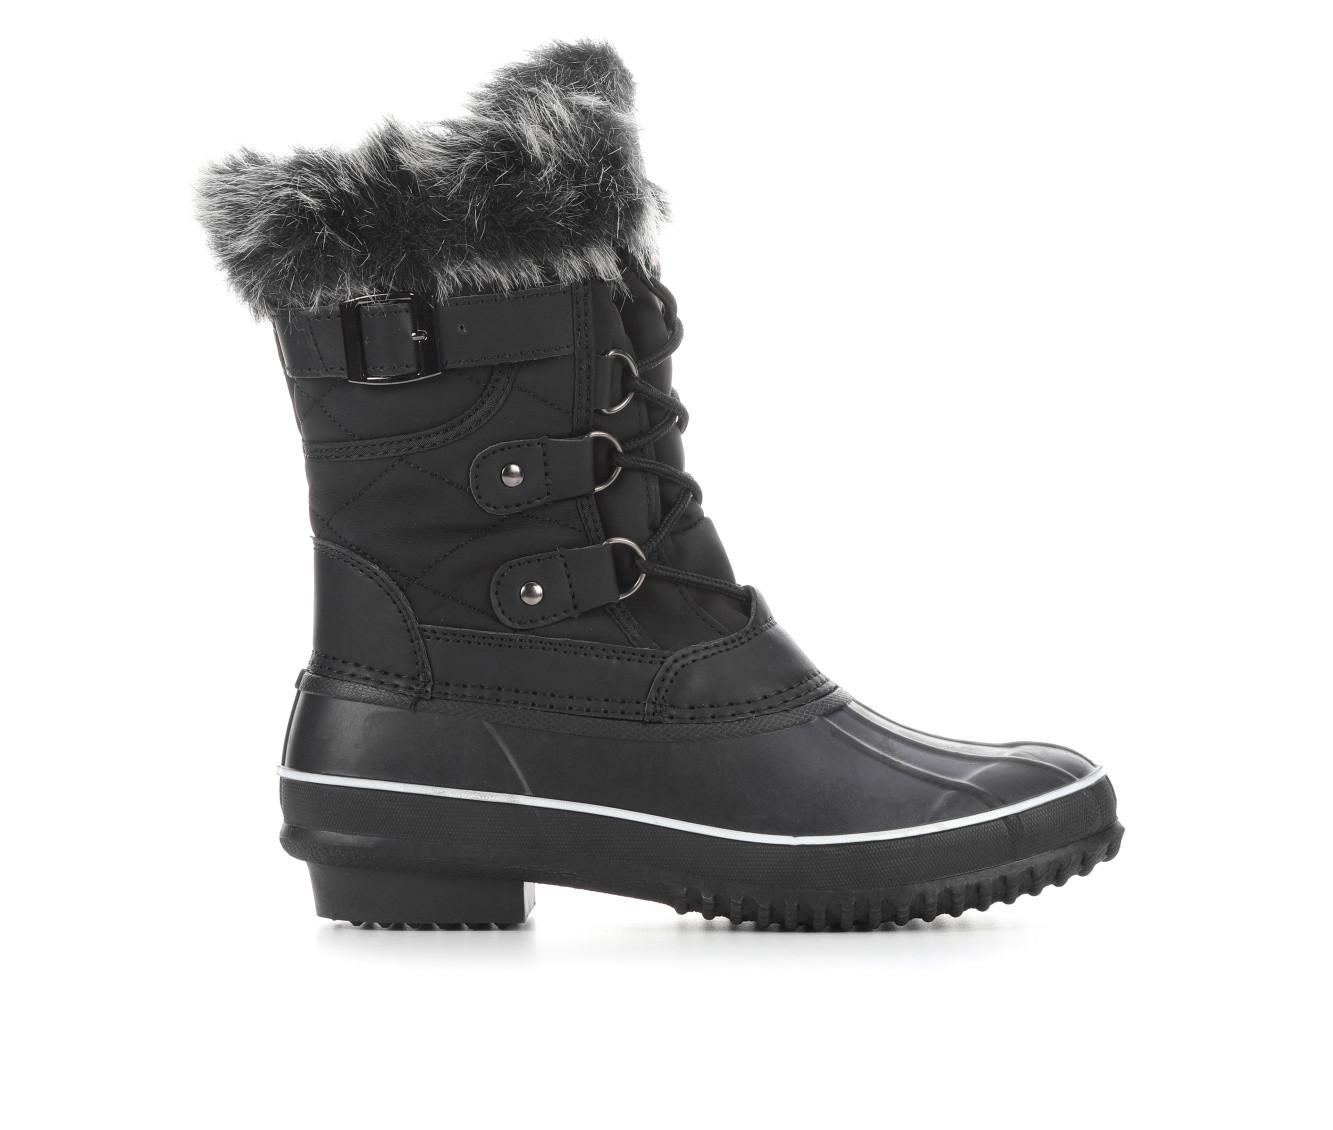 Women's Winter Boots, Snow Boots